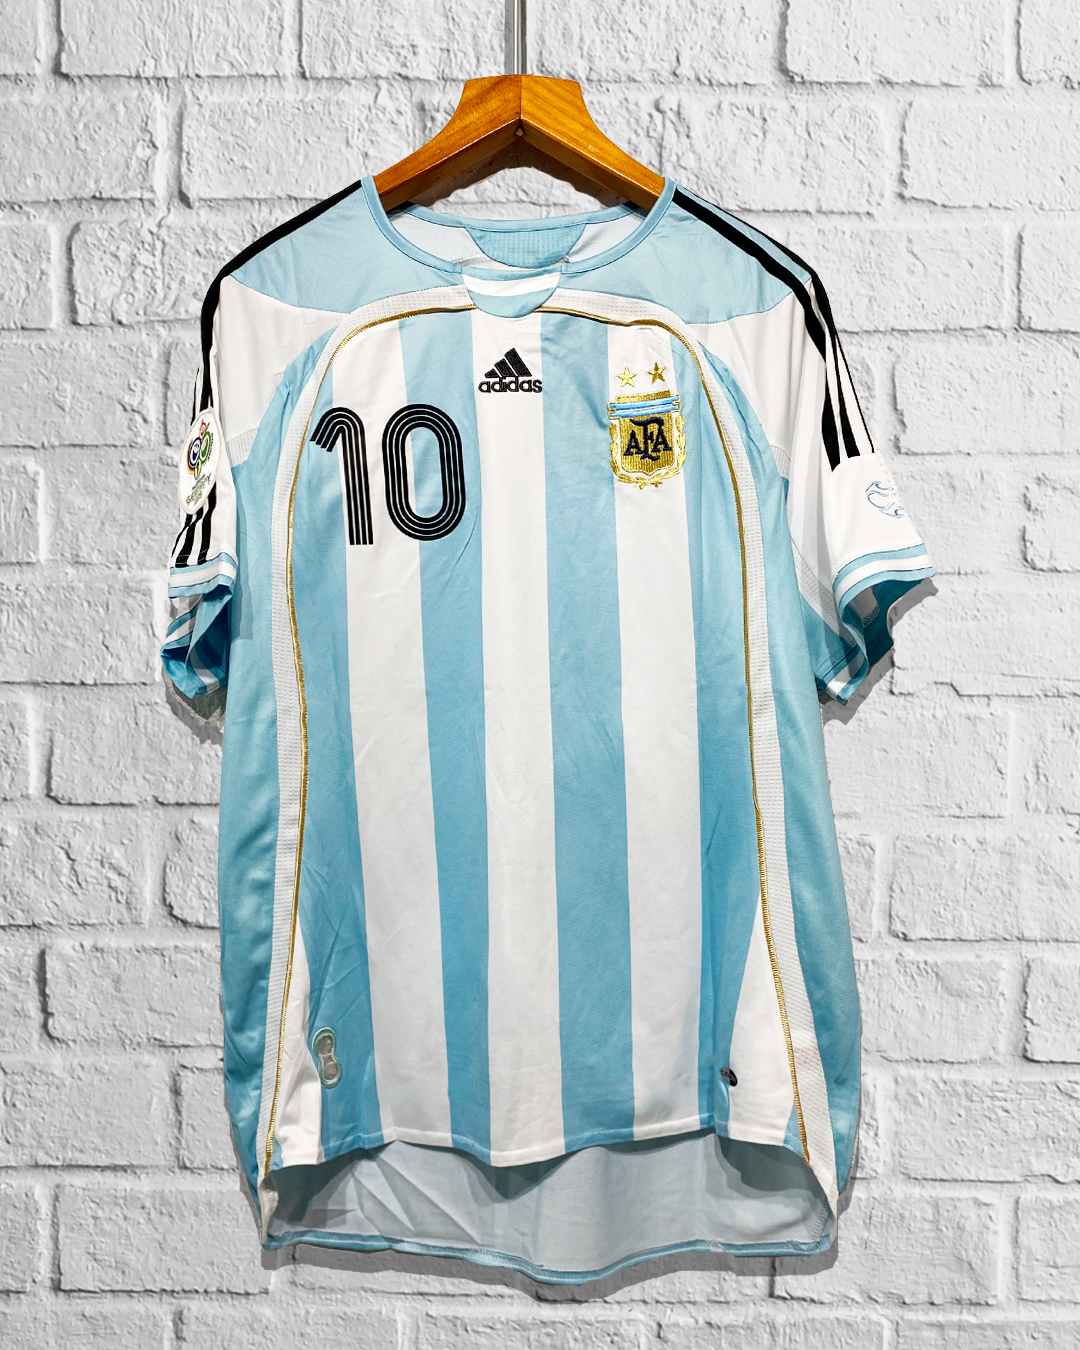 jersey argentina 2006 local frente